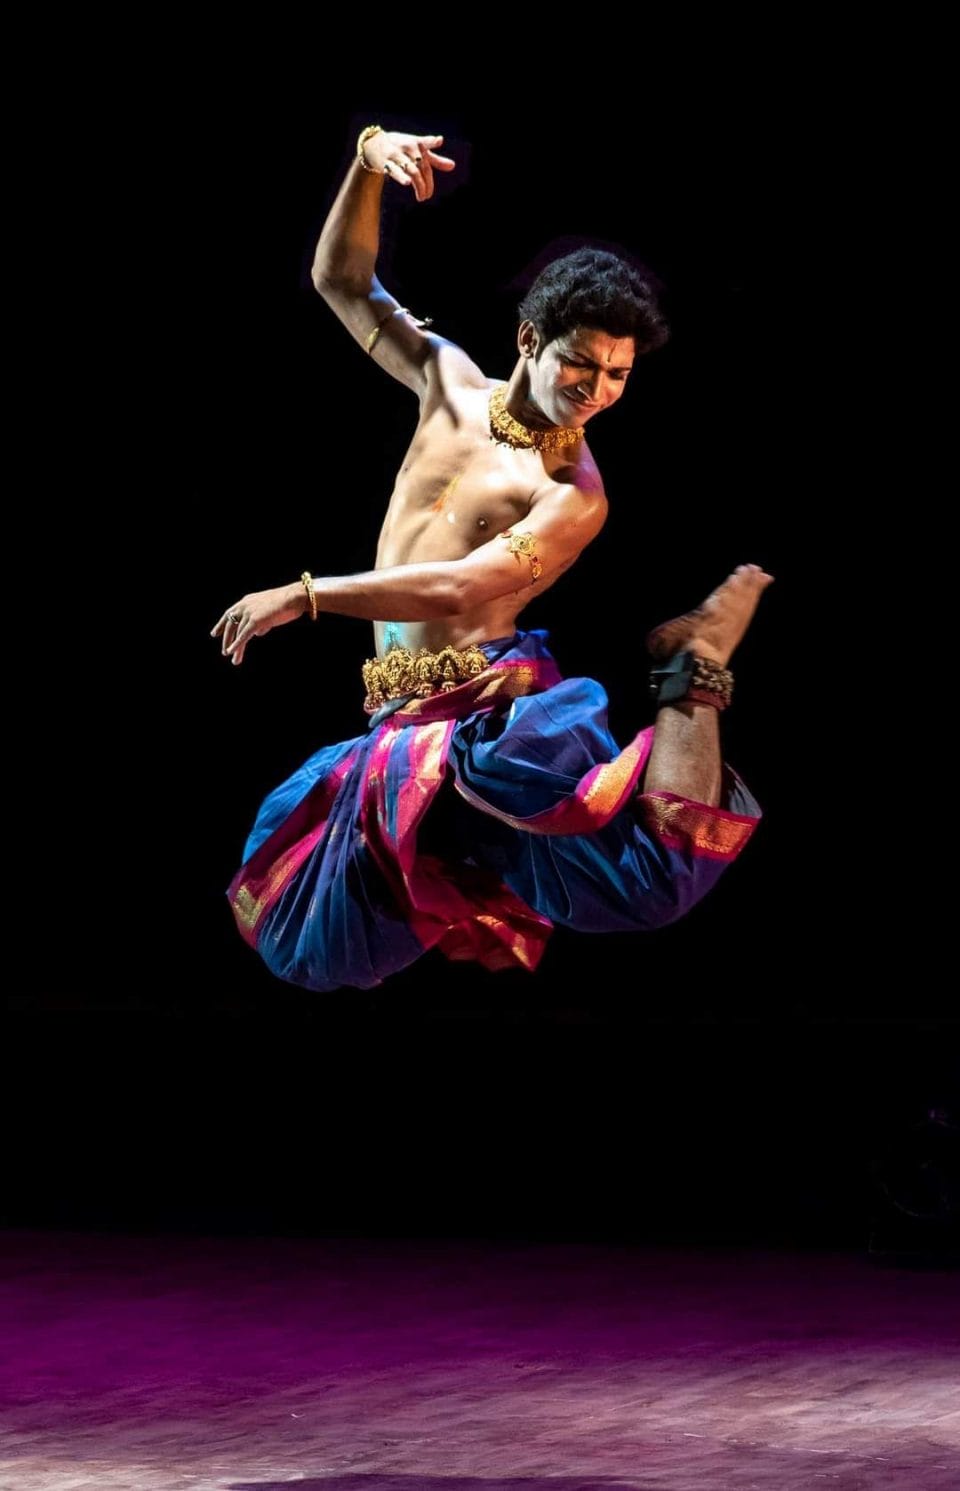 Supratim Talukder: Treasuring the Divine Gift of Dance